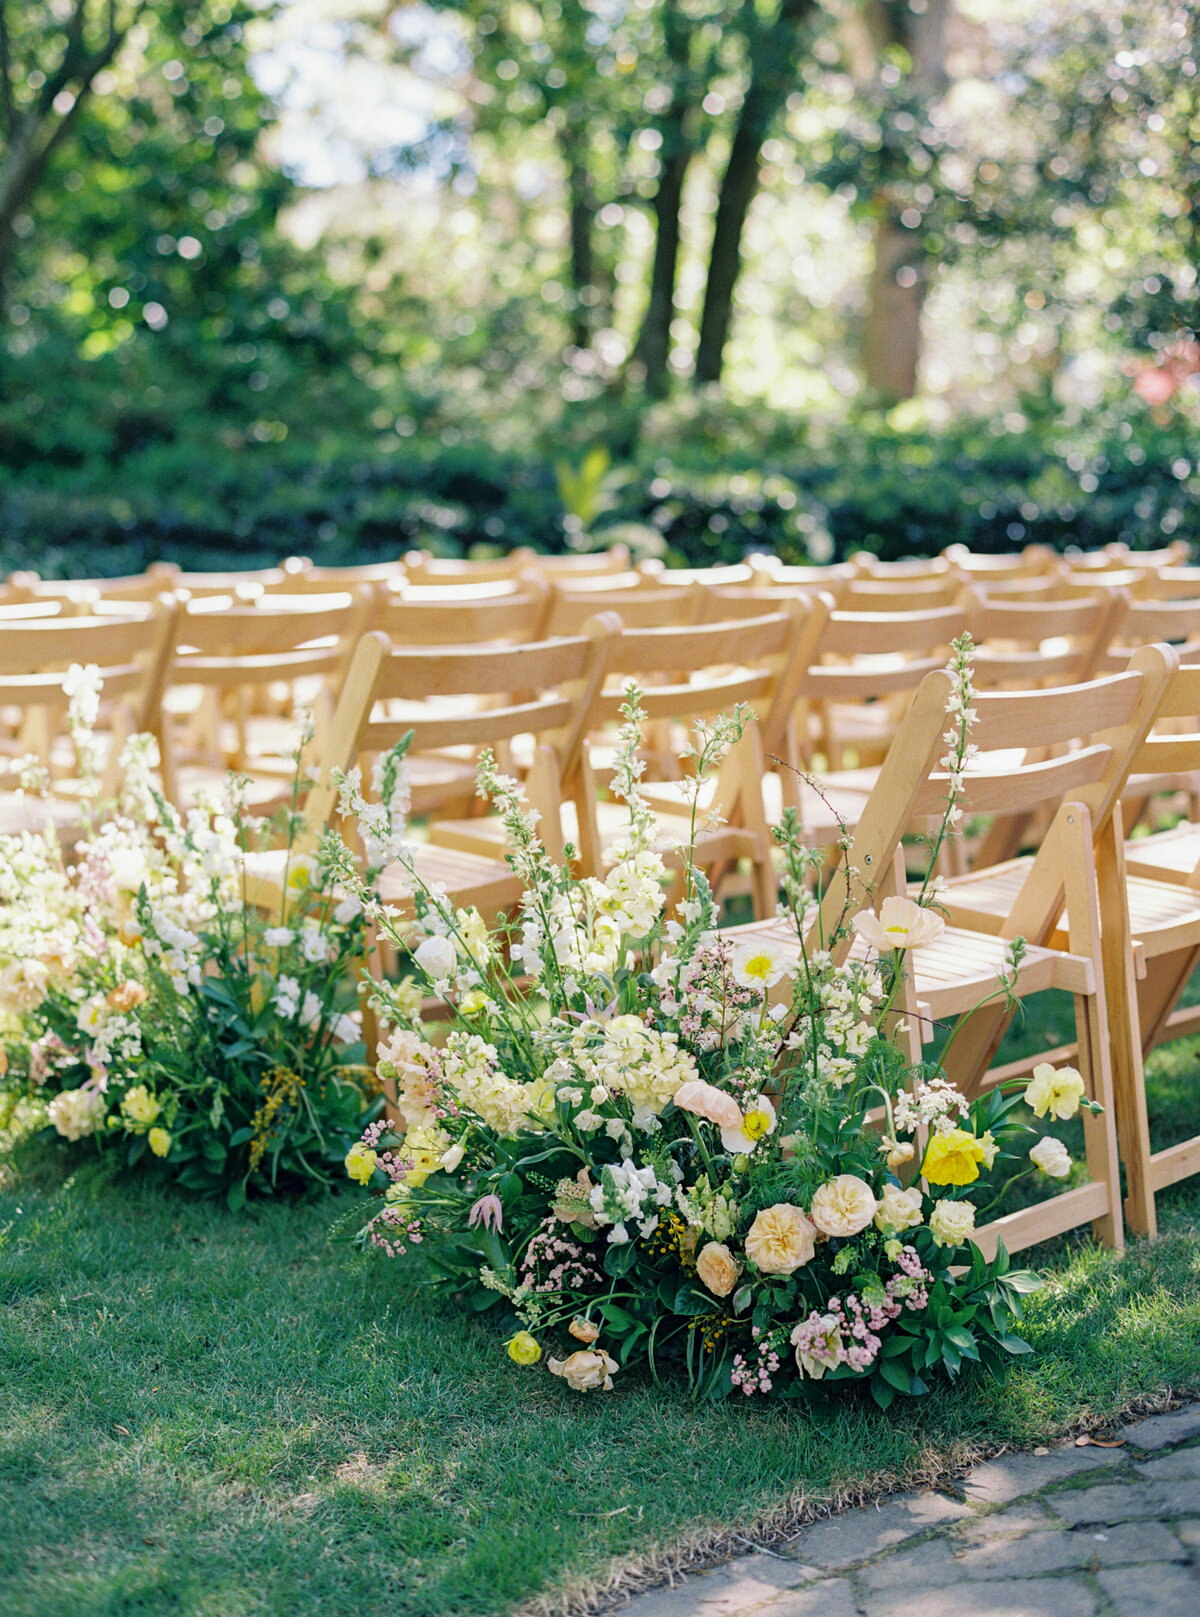 thomas bennett House wedding reception chairs and aisle flowers. Charleston destination wedding.